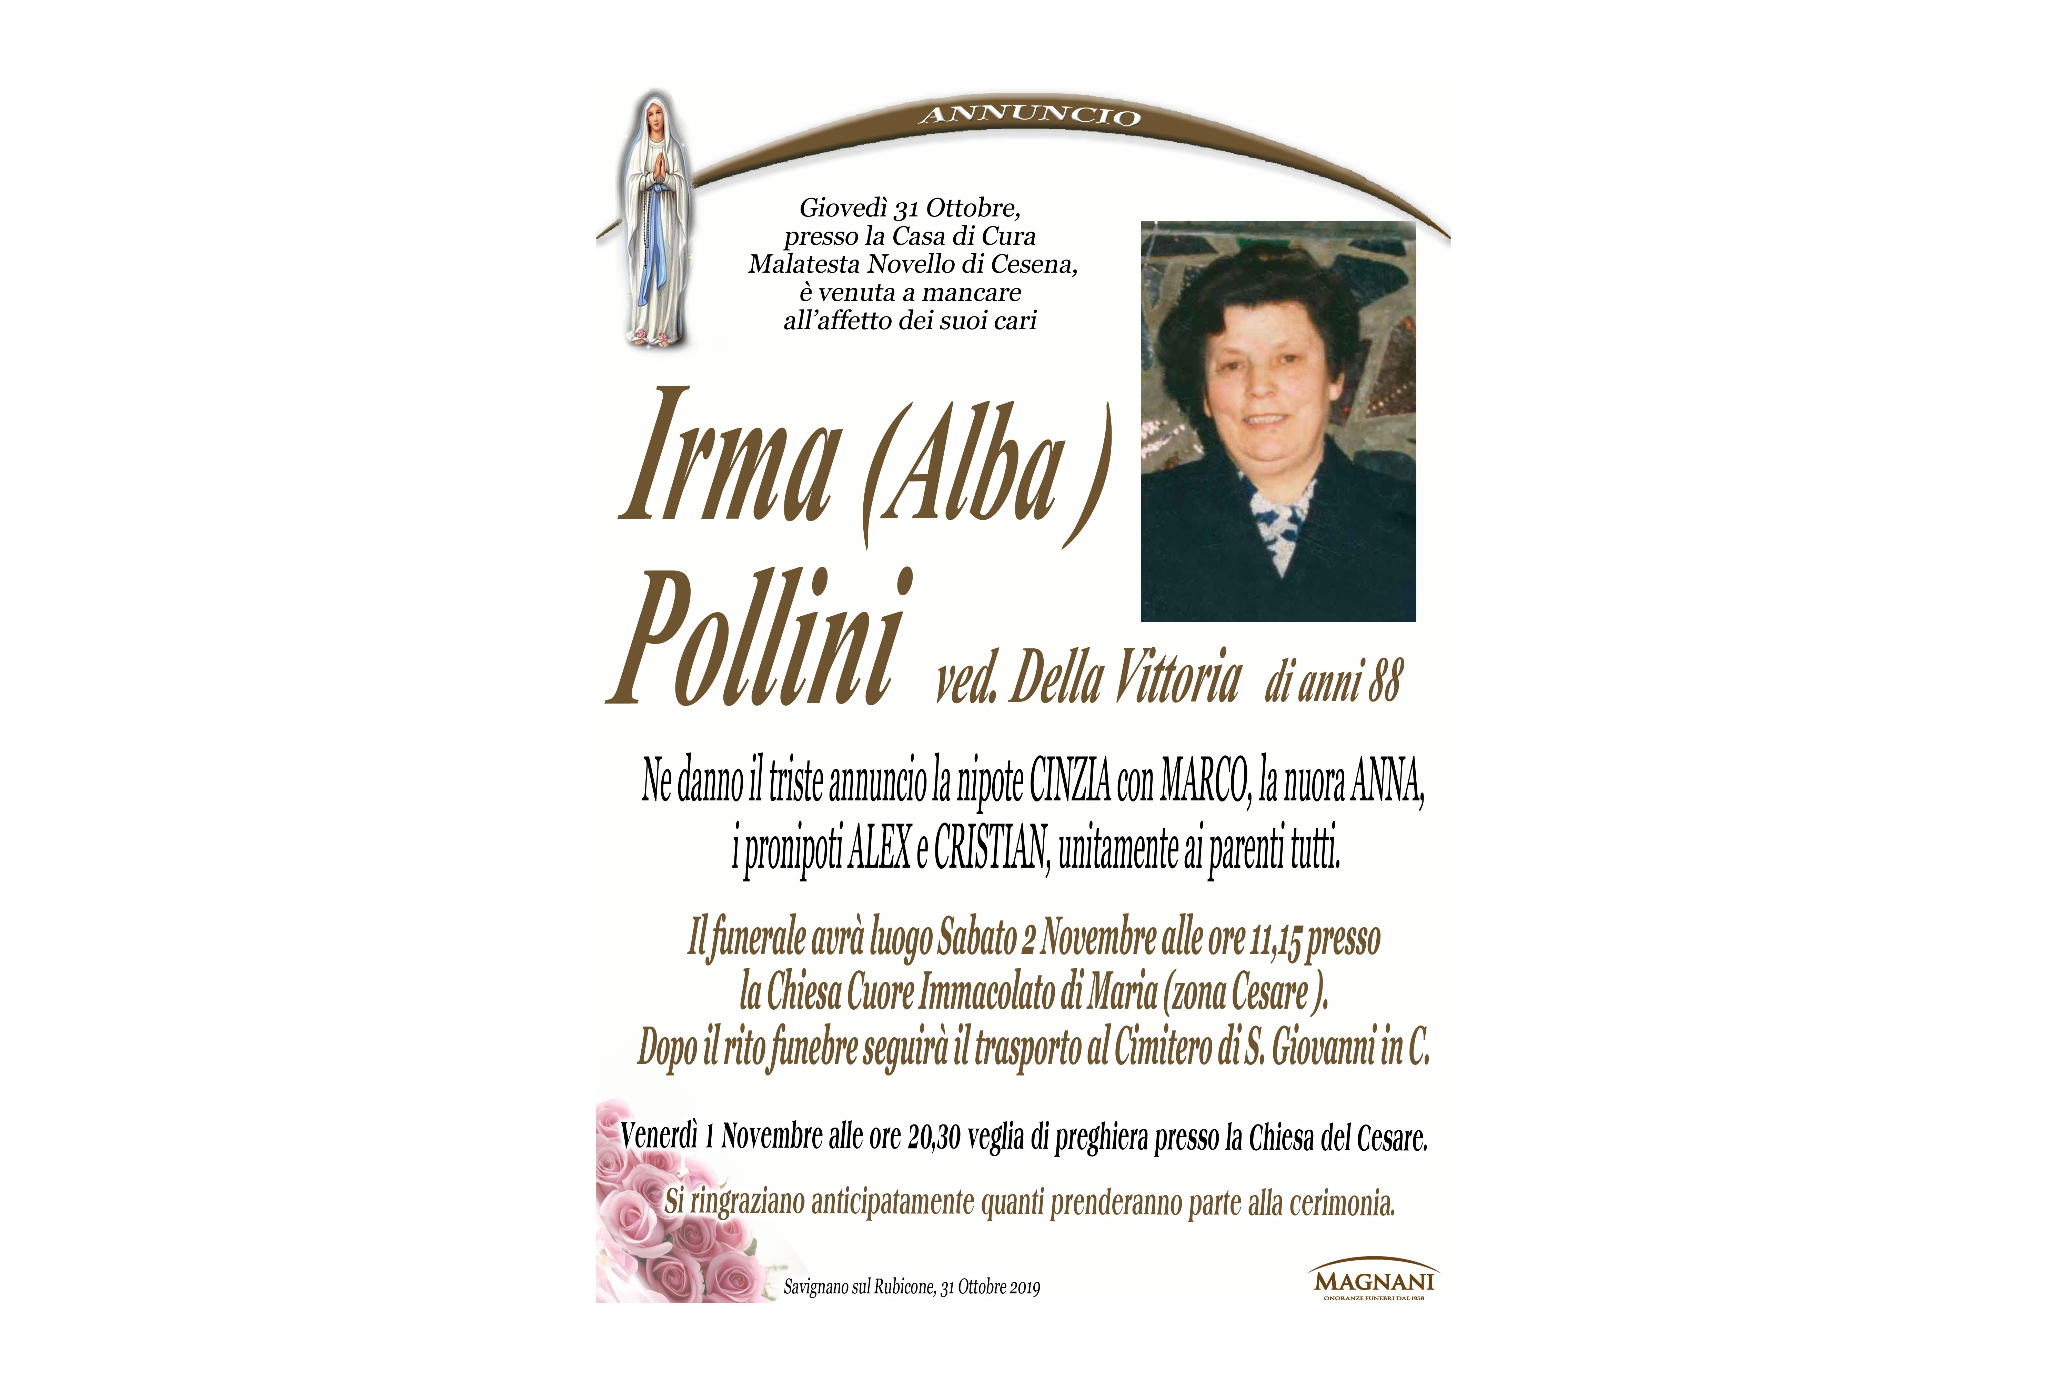 Irma Pollini